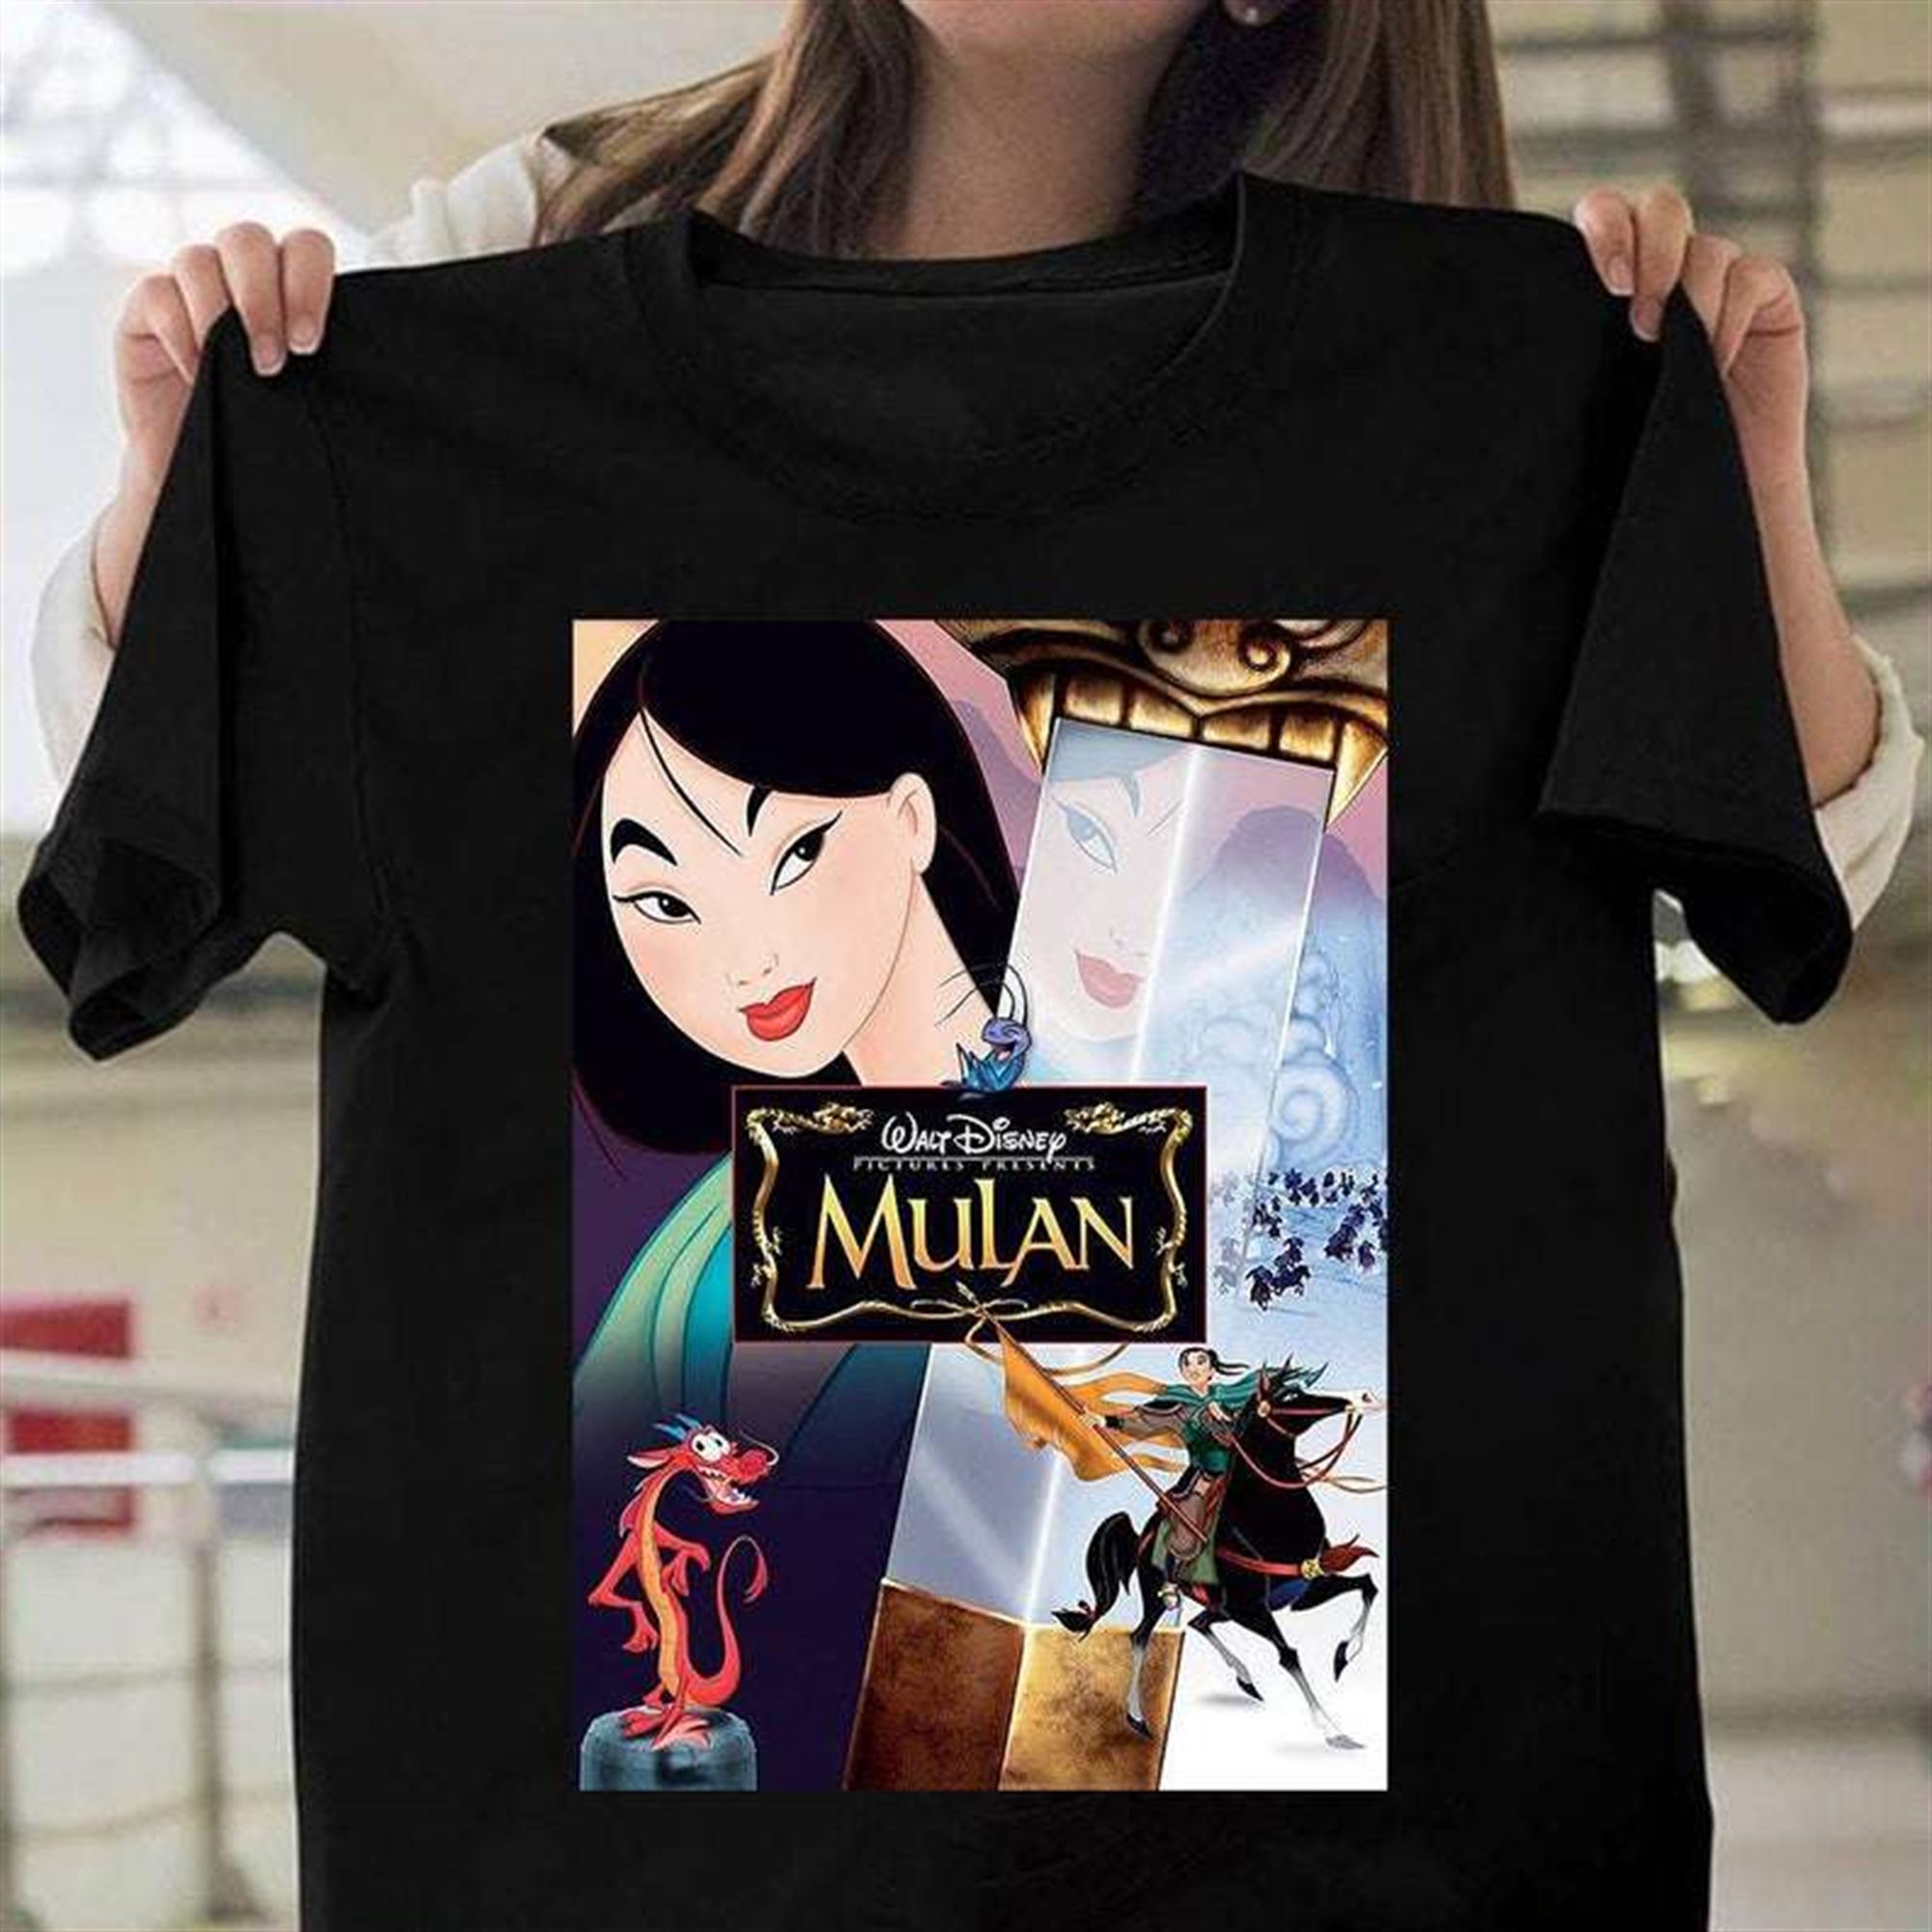 Disney Princess Mulan T Shirt Full Size Up To 5xl